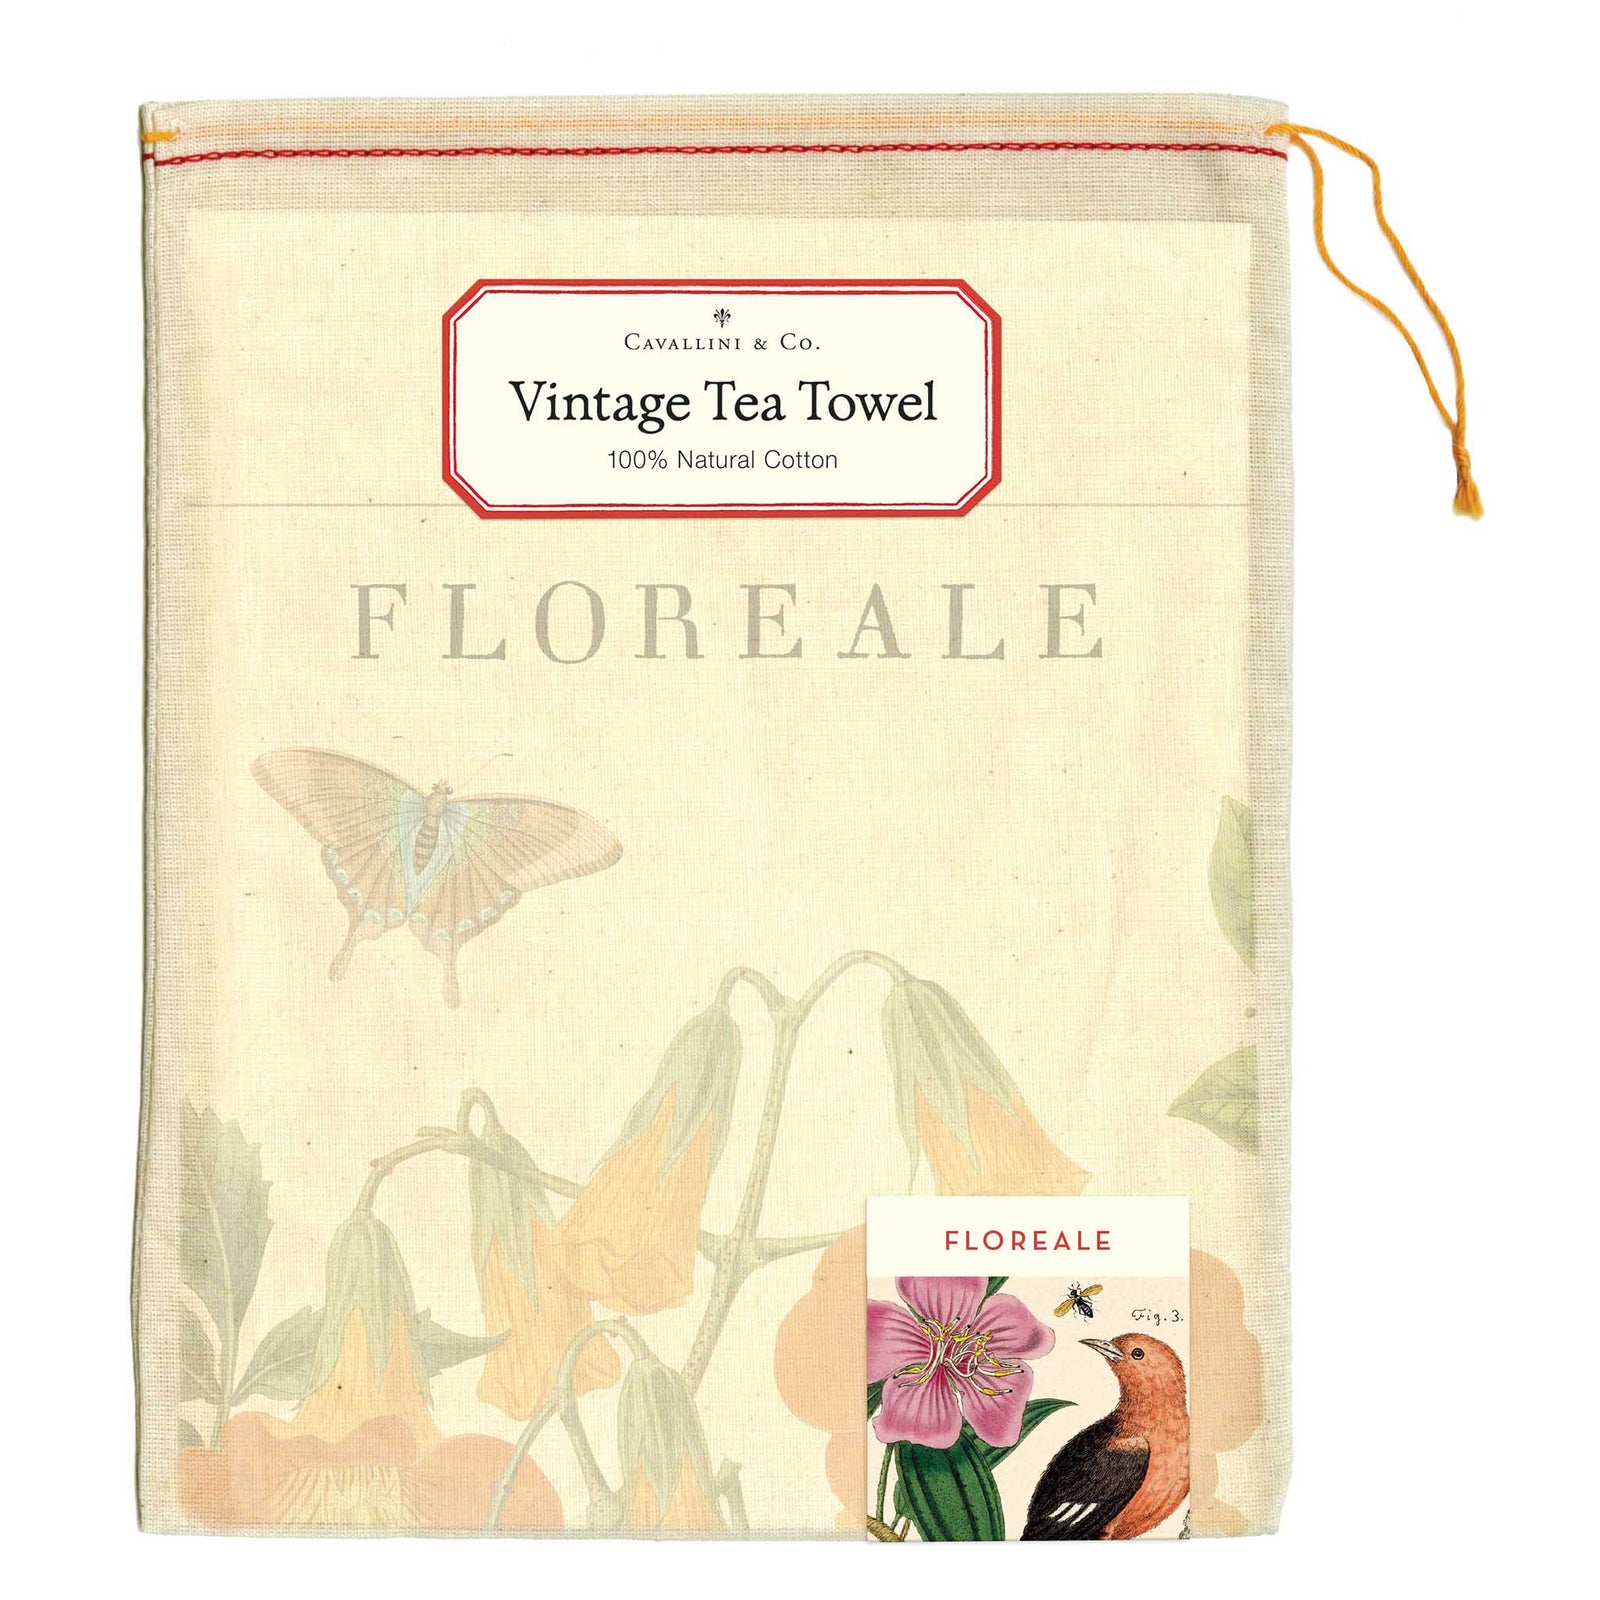 Gift - Vintage Botanica Tea Towel - Buy Online at Annie's Annuals